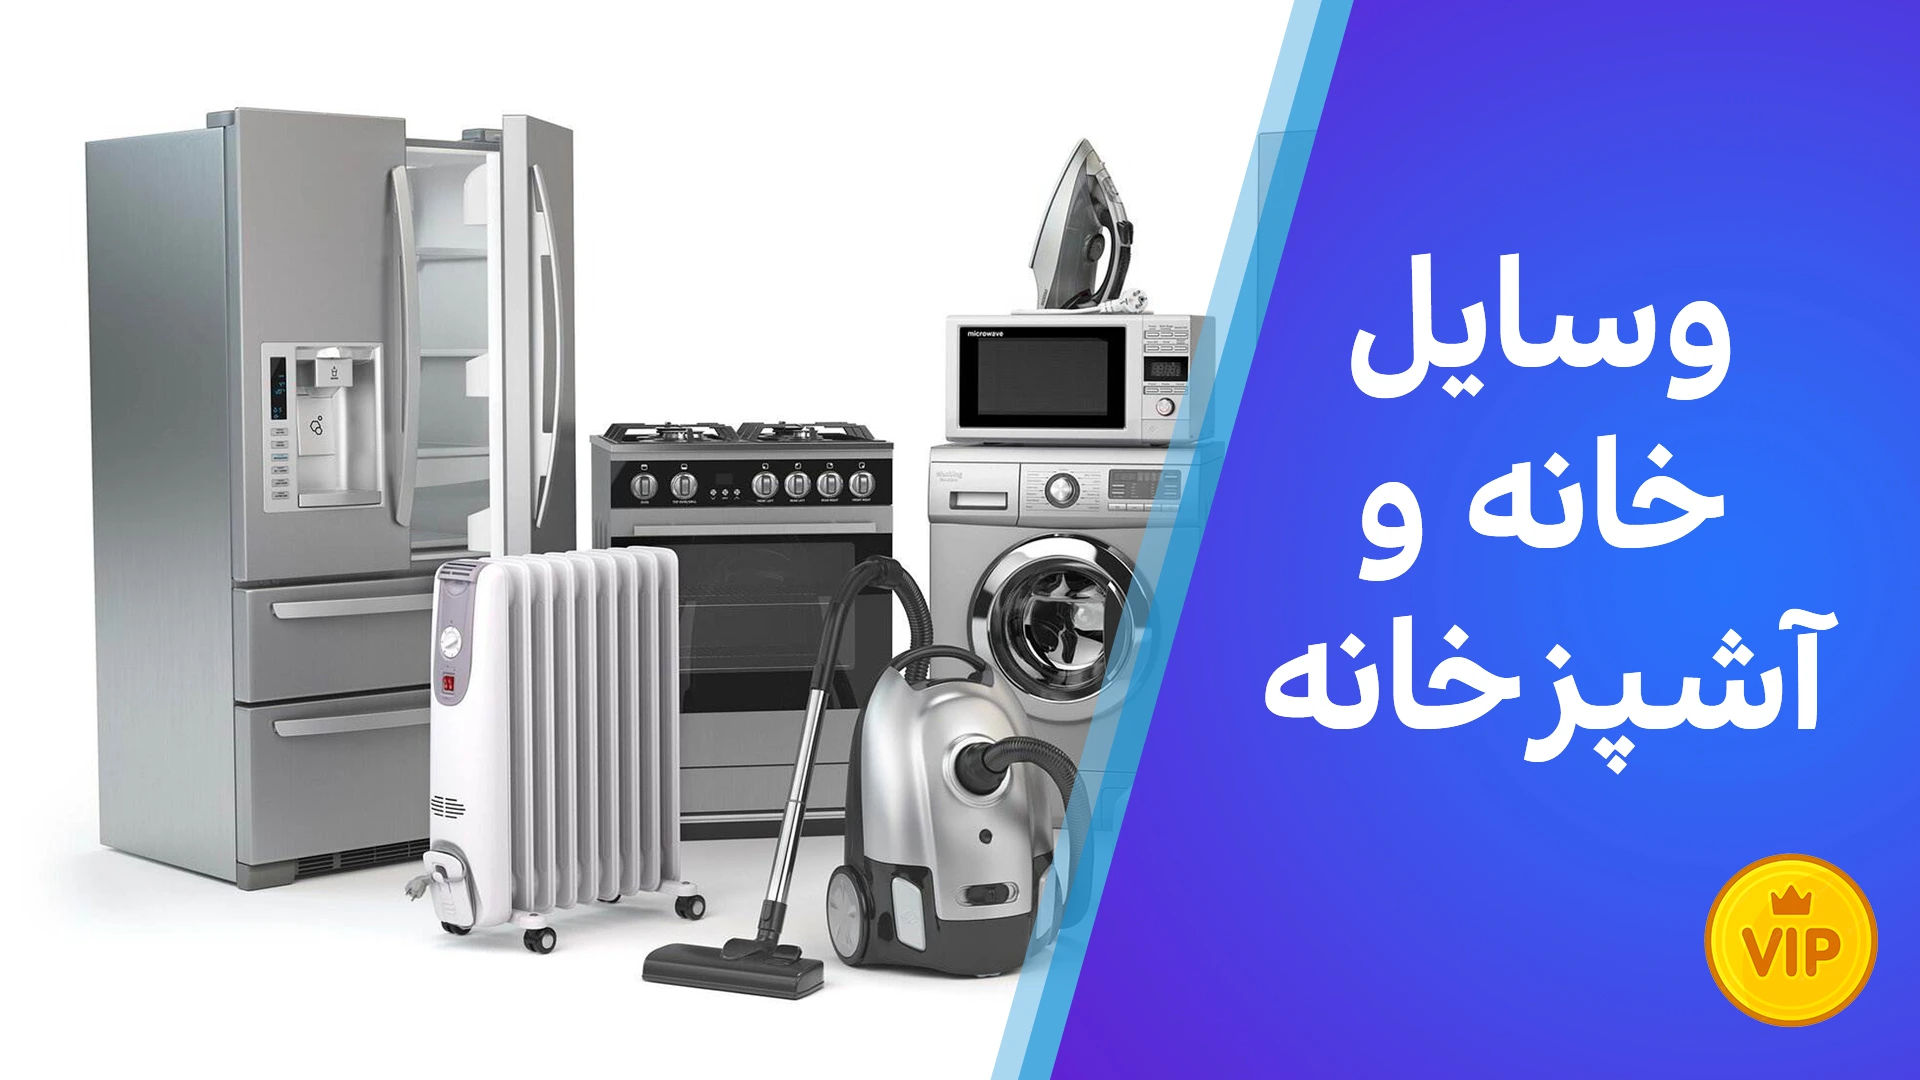 لغت/وسایل خانه و آشپزخانه به عربی لهجه شامی + صوت